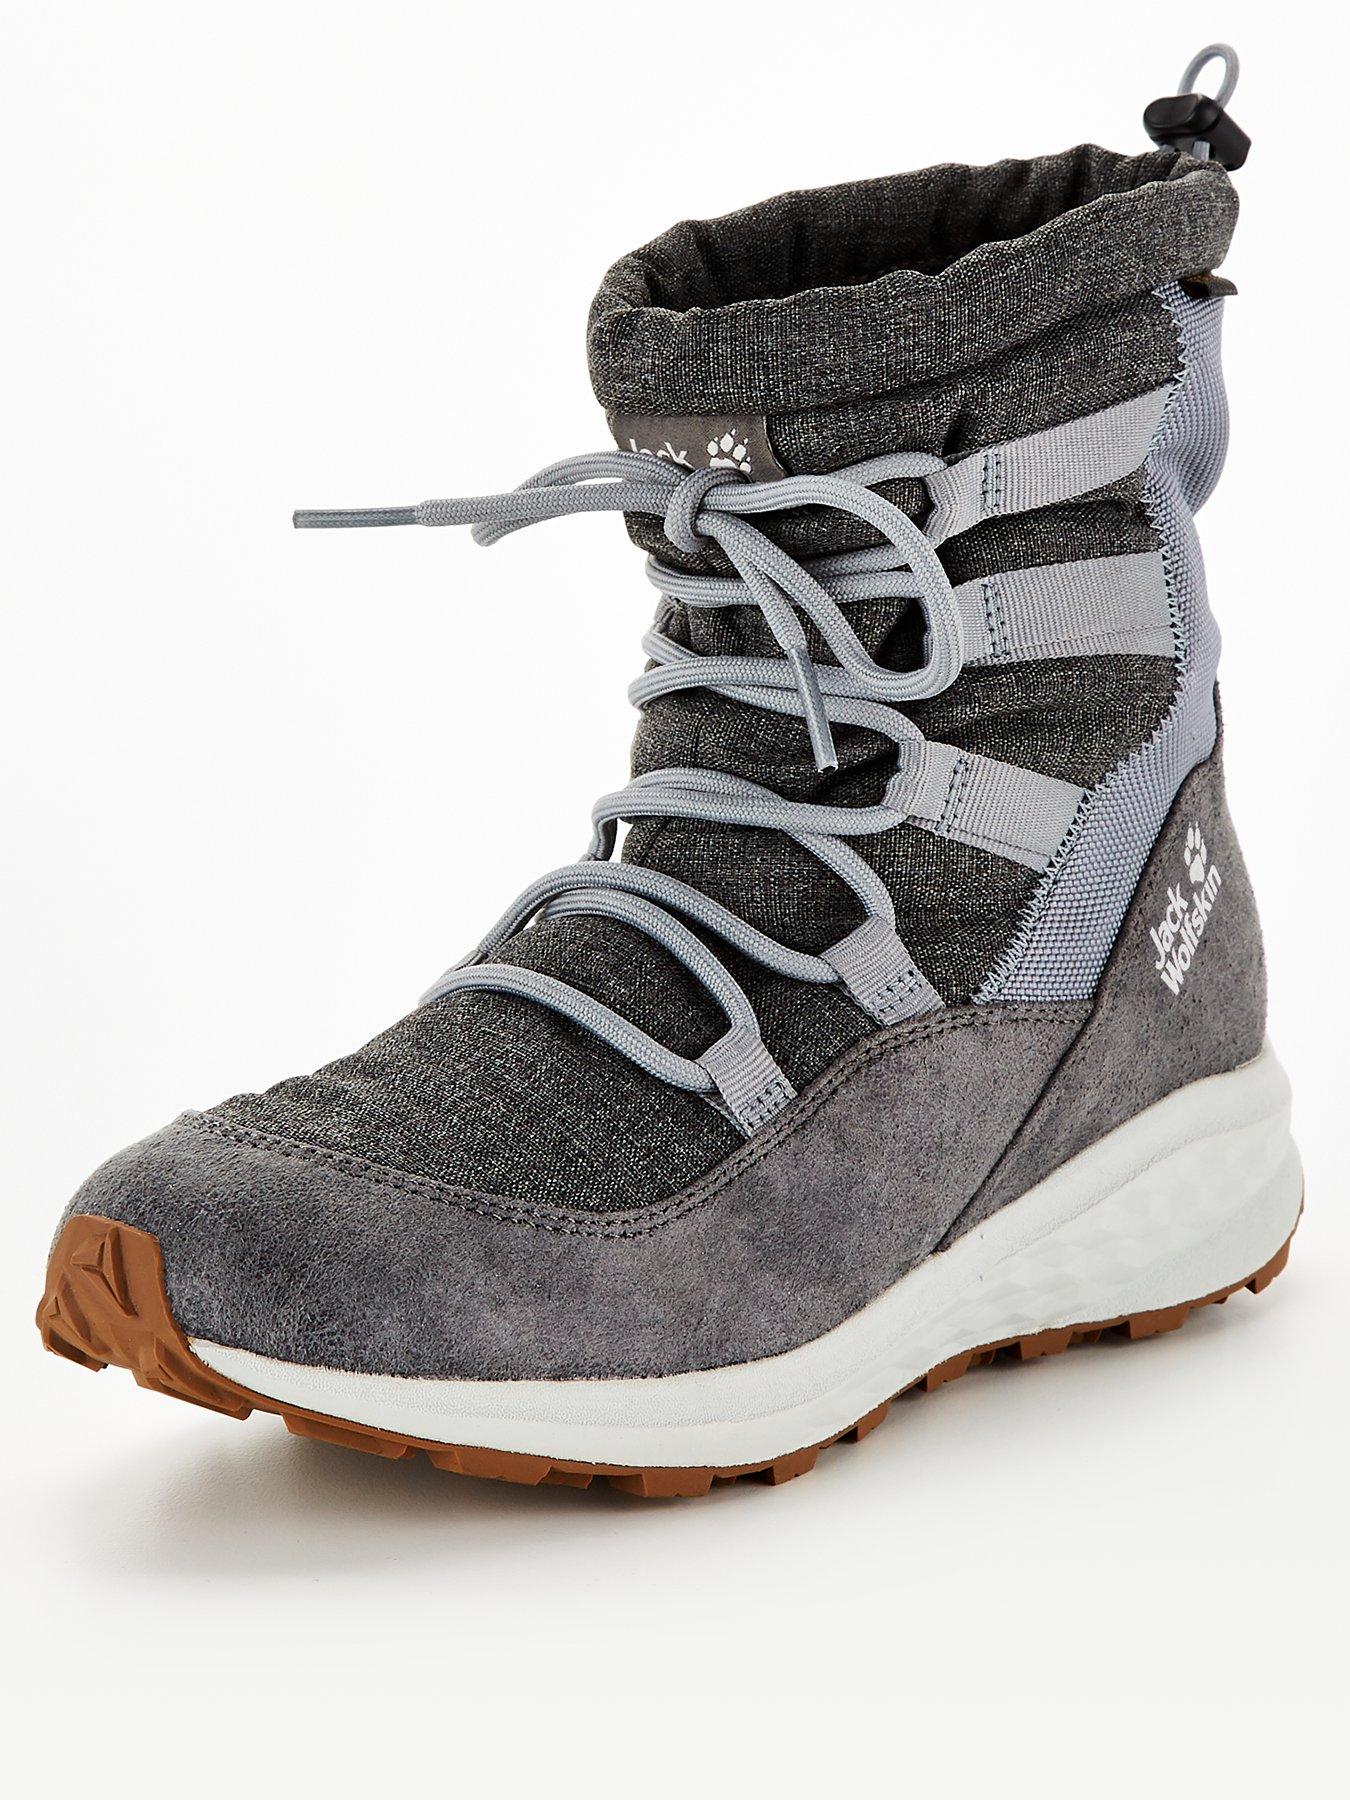 grey boots ireland